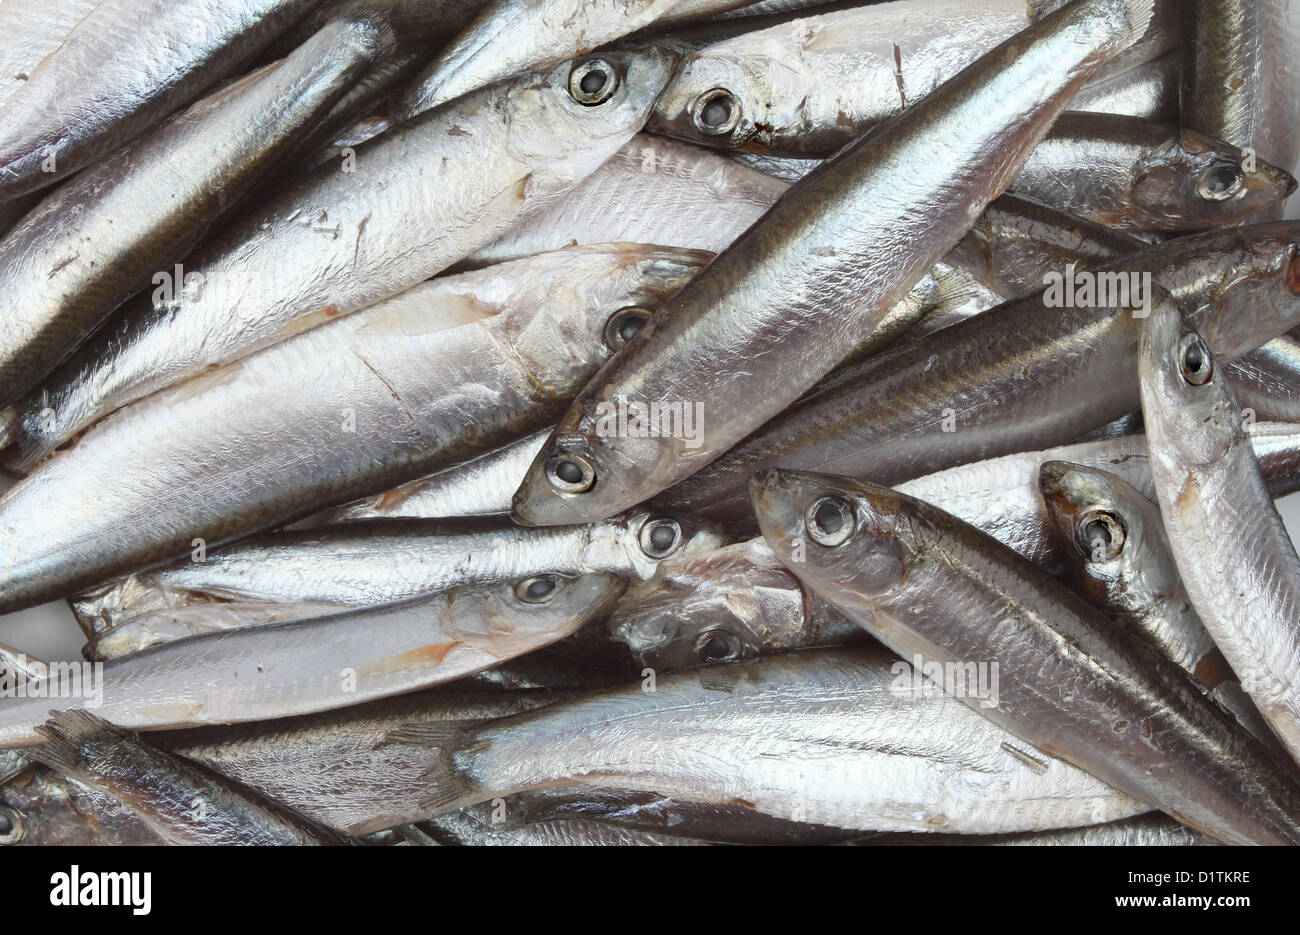 Closeup of small raw whitebait fish Stock Photo